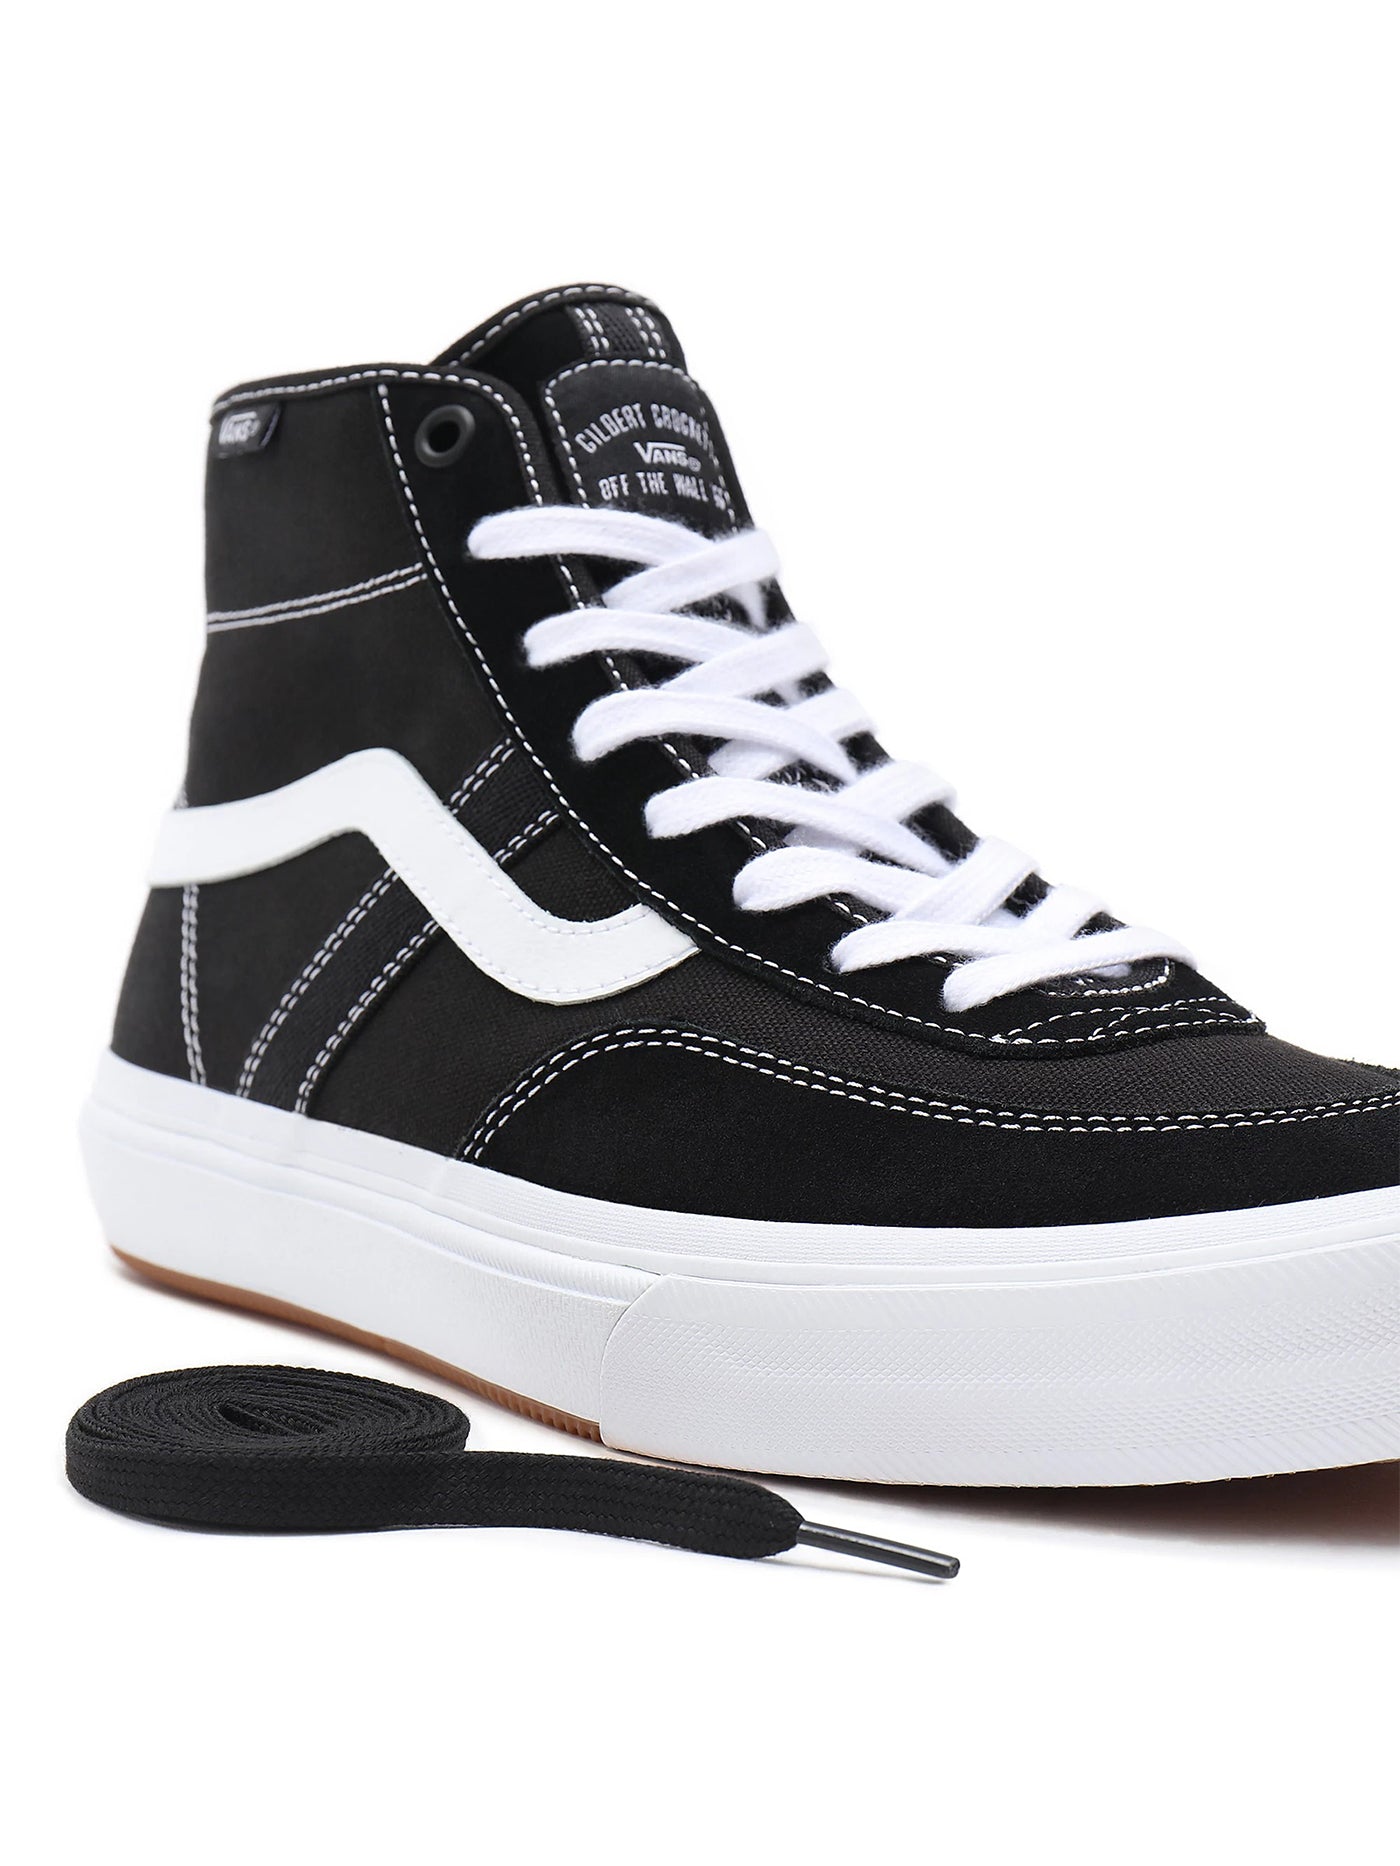 Vans Crockett High Pro Black/White Shoes